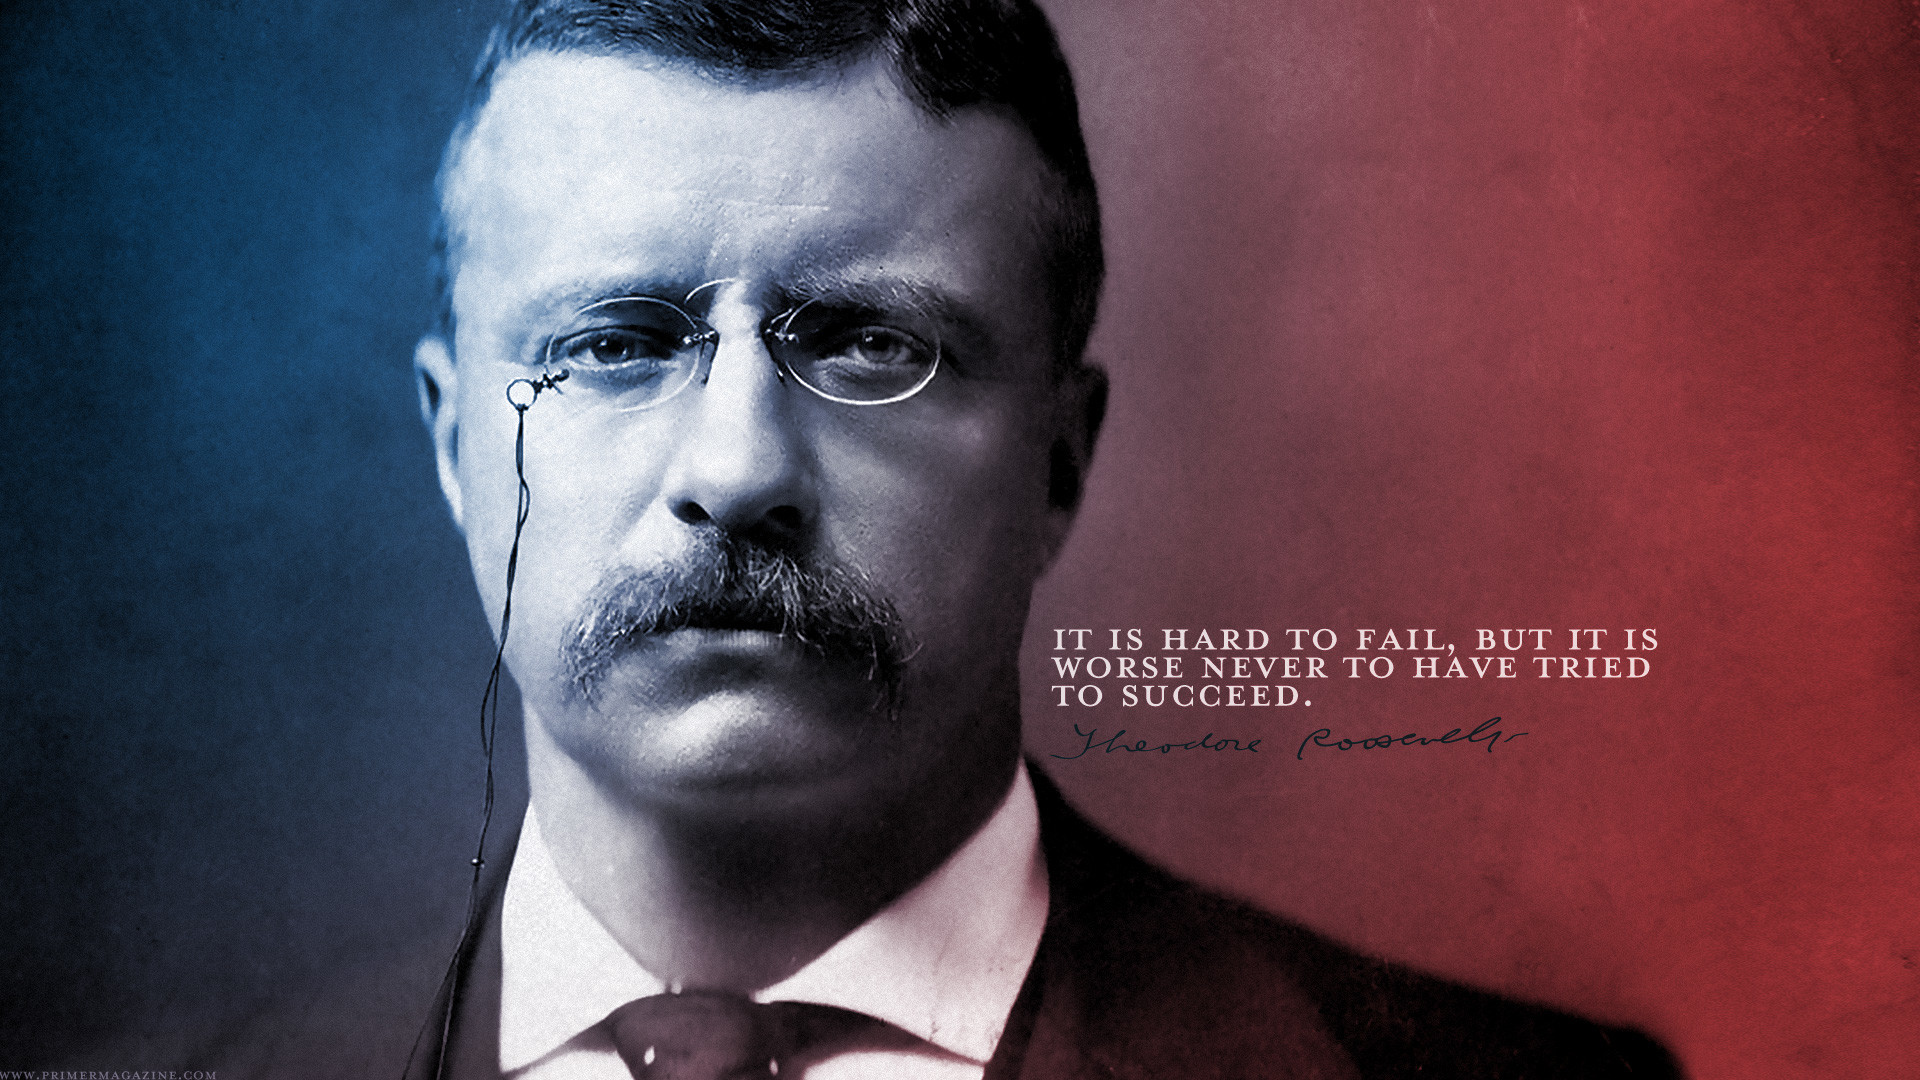 1920x1080 Wednesday Wallpaper: Failure vs Success by Teddy Roosevelt